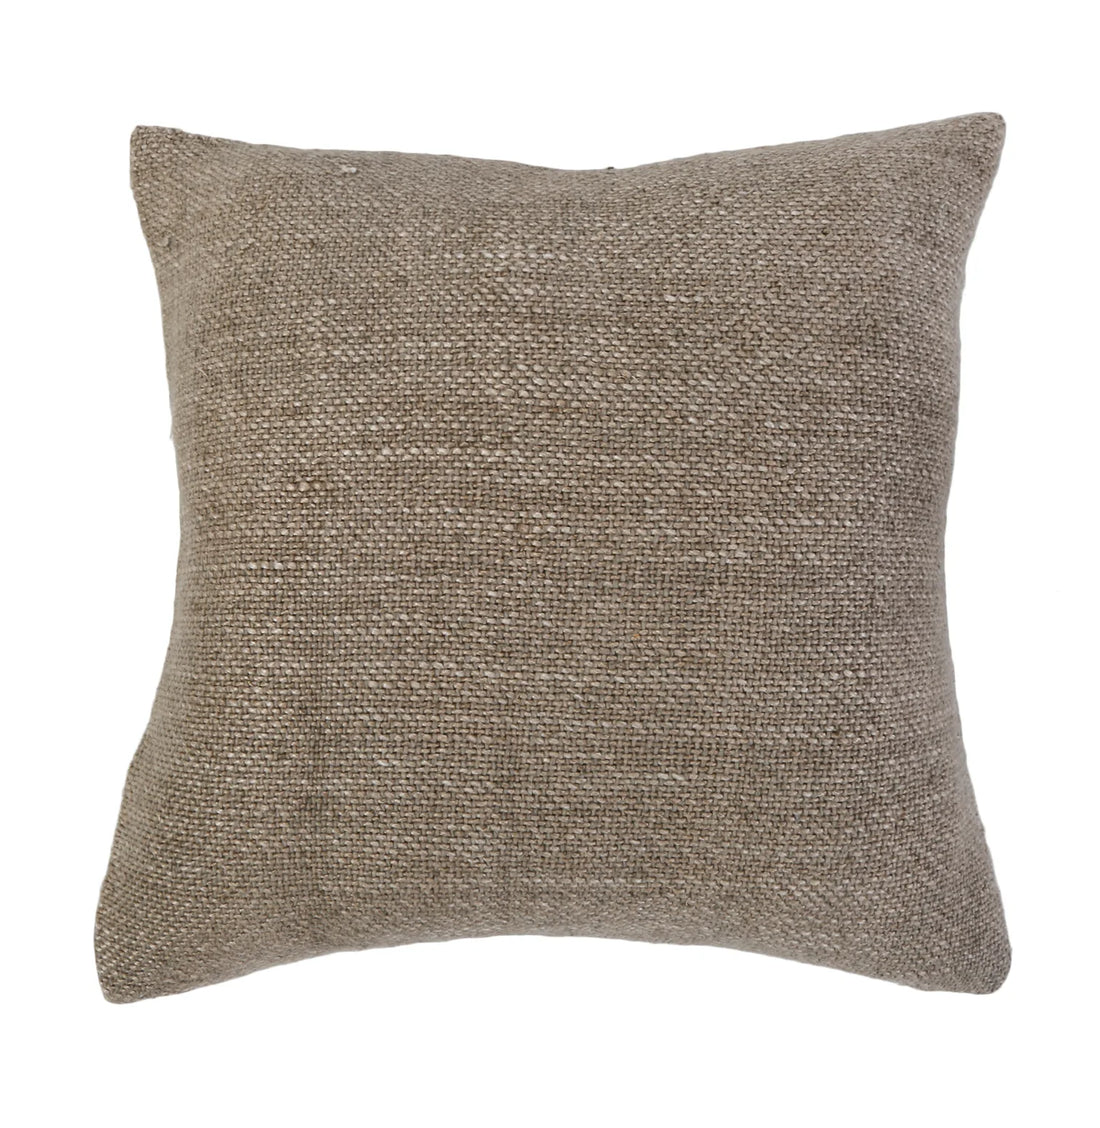 Hendrick Square Pillow, Sand